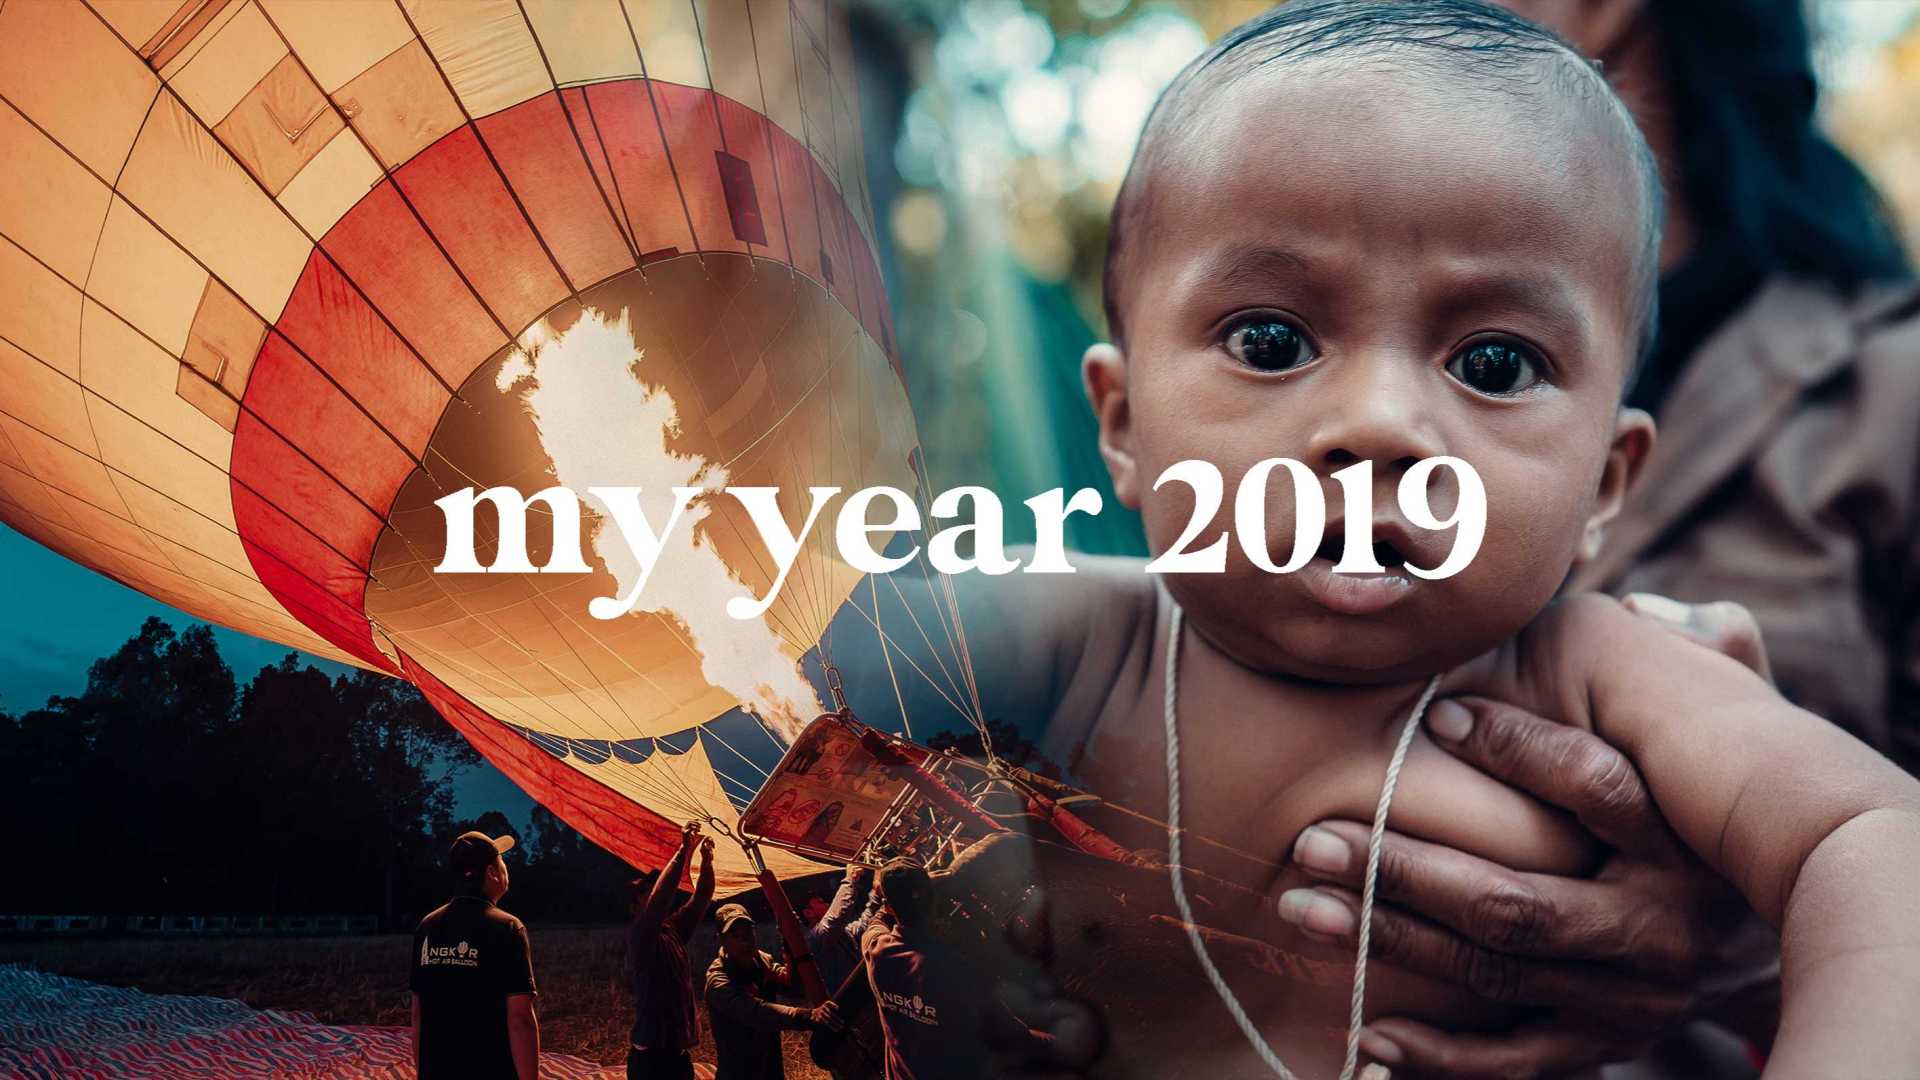 【旅拍混剪】MY YEAR 2019 | 火种